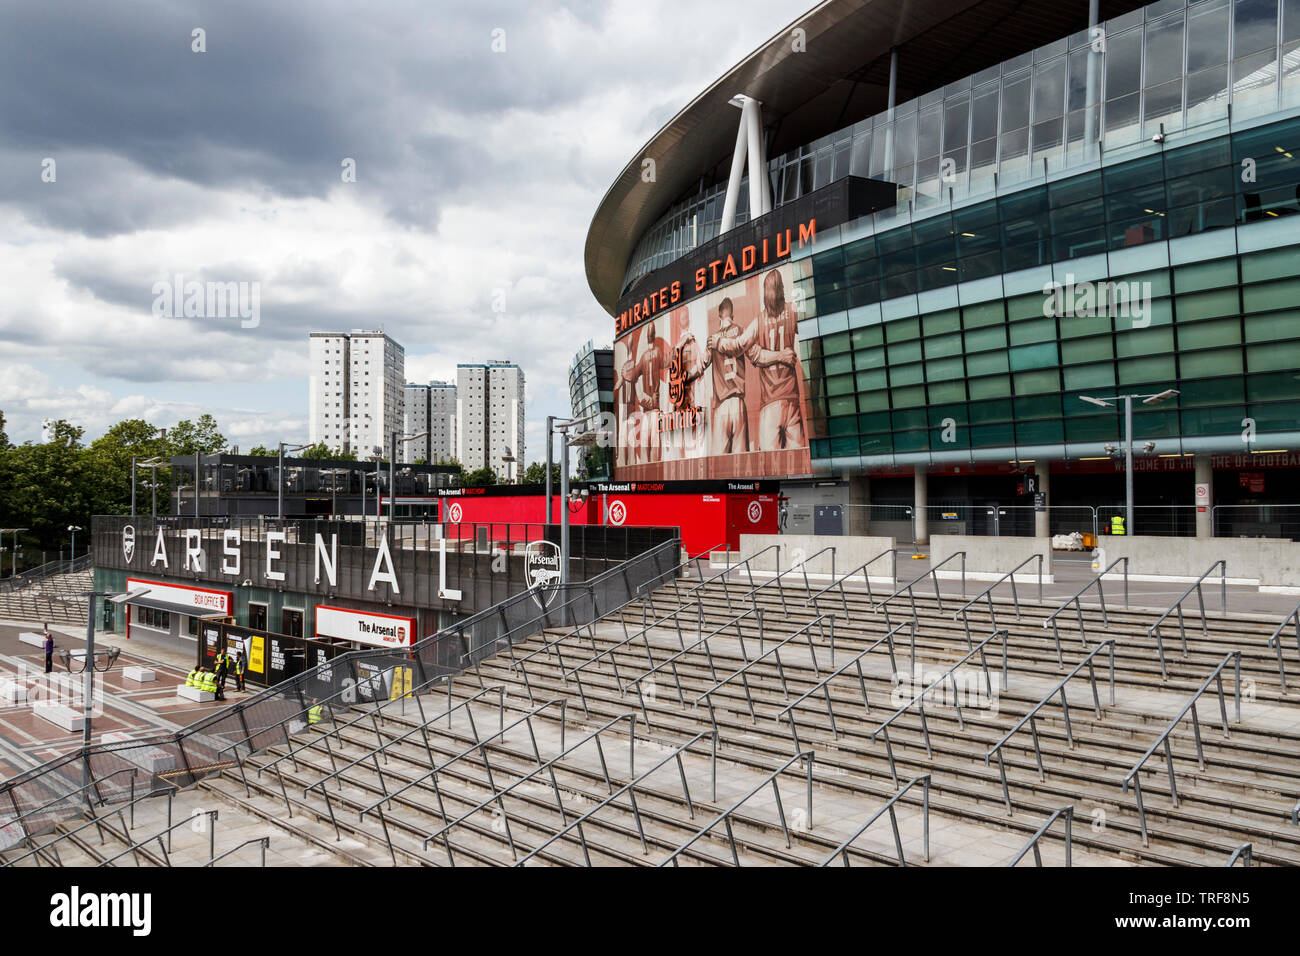 El Emirates Stadium, hogar del club de fútbol del Arsenal, Islington, Londres, Reino Unido, 2019 Foto de stock